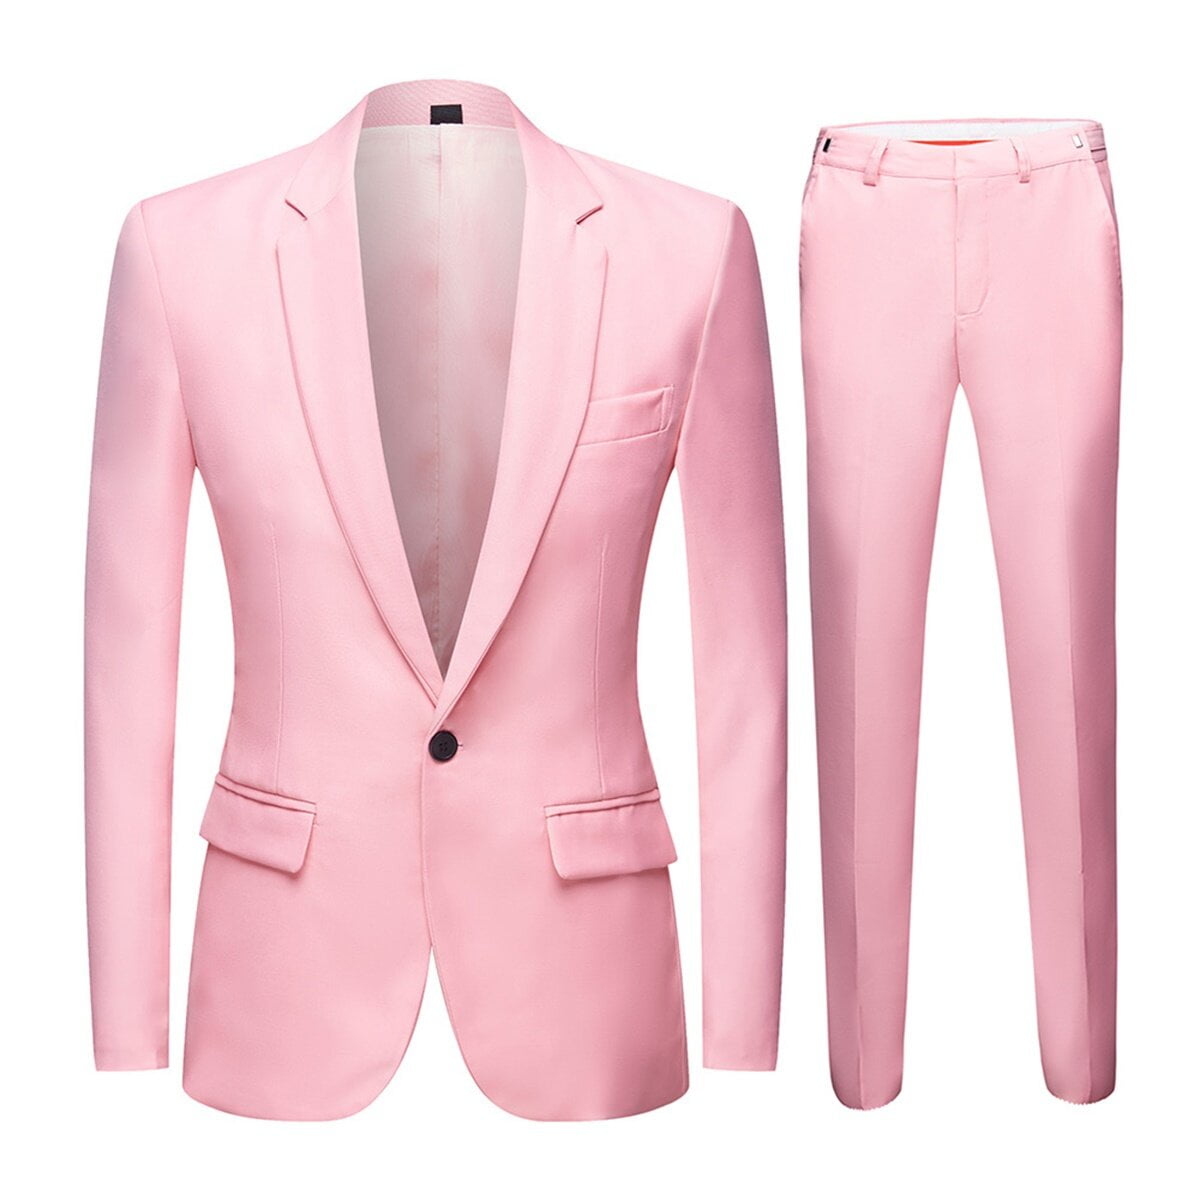 CloudStyle Men's Two Piece Sets One Button Pink Dress Suit Party ...